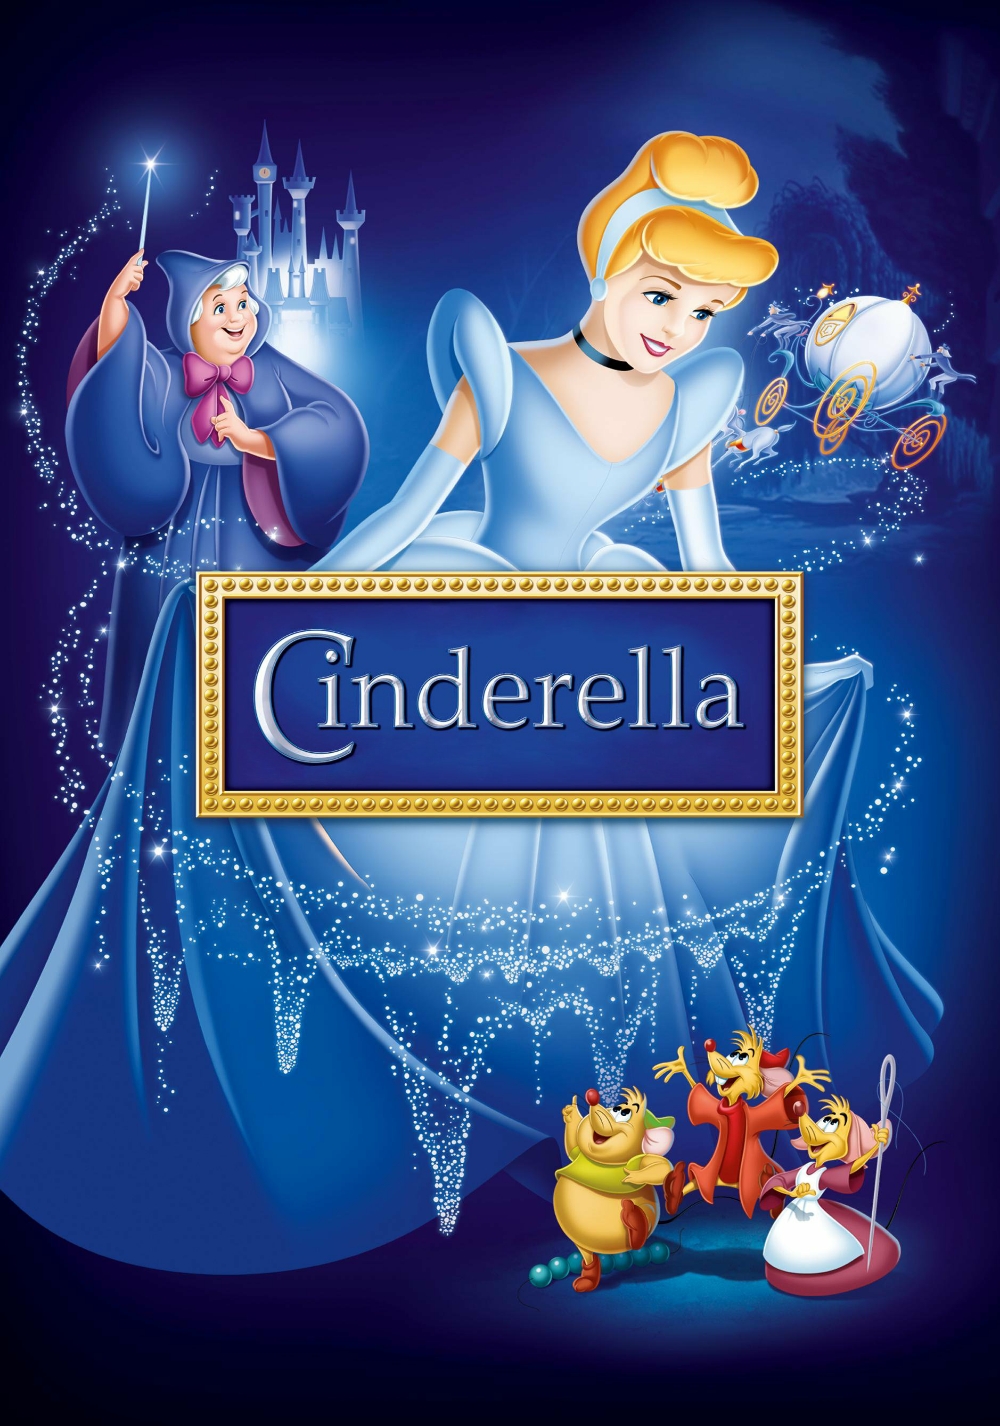 Cinderella (1950) Art. 